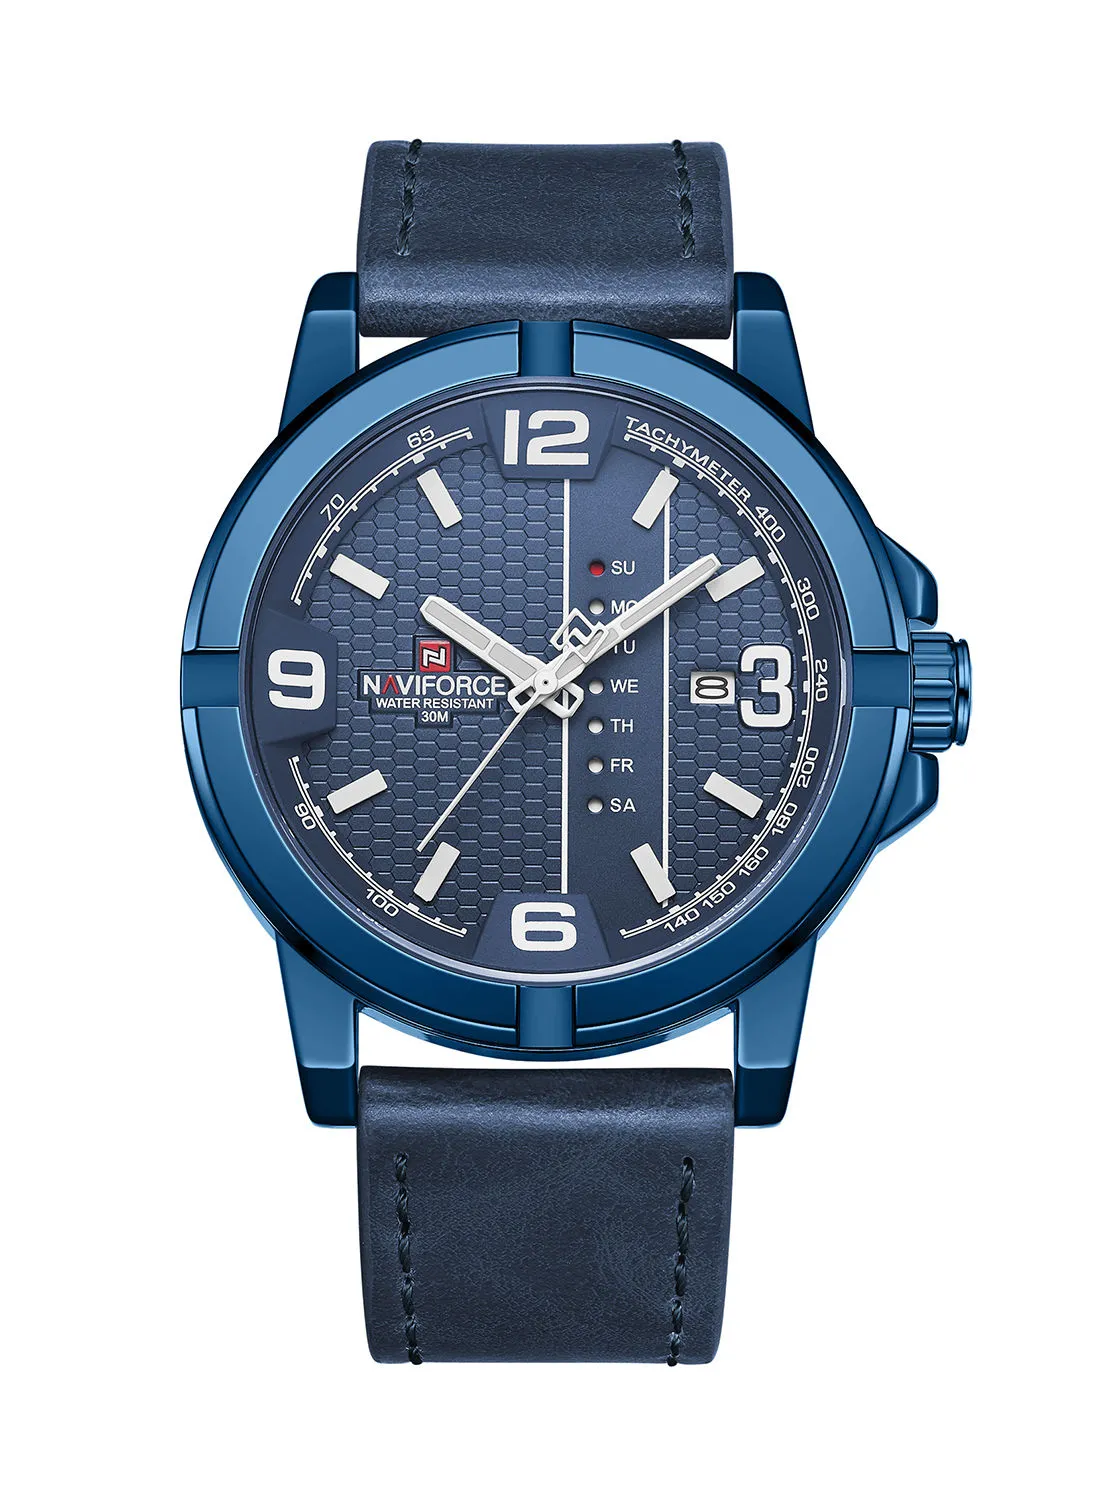 NAVIFORCE ساعة يد جلد بعقارب ورقمية للرجال NF9177 BE / W / BE - 45 مم - أزرق